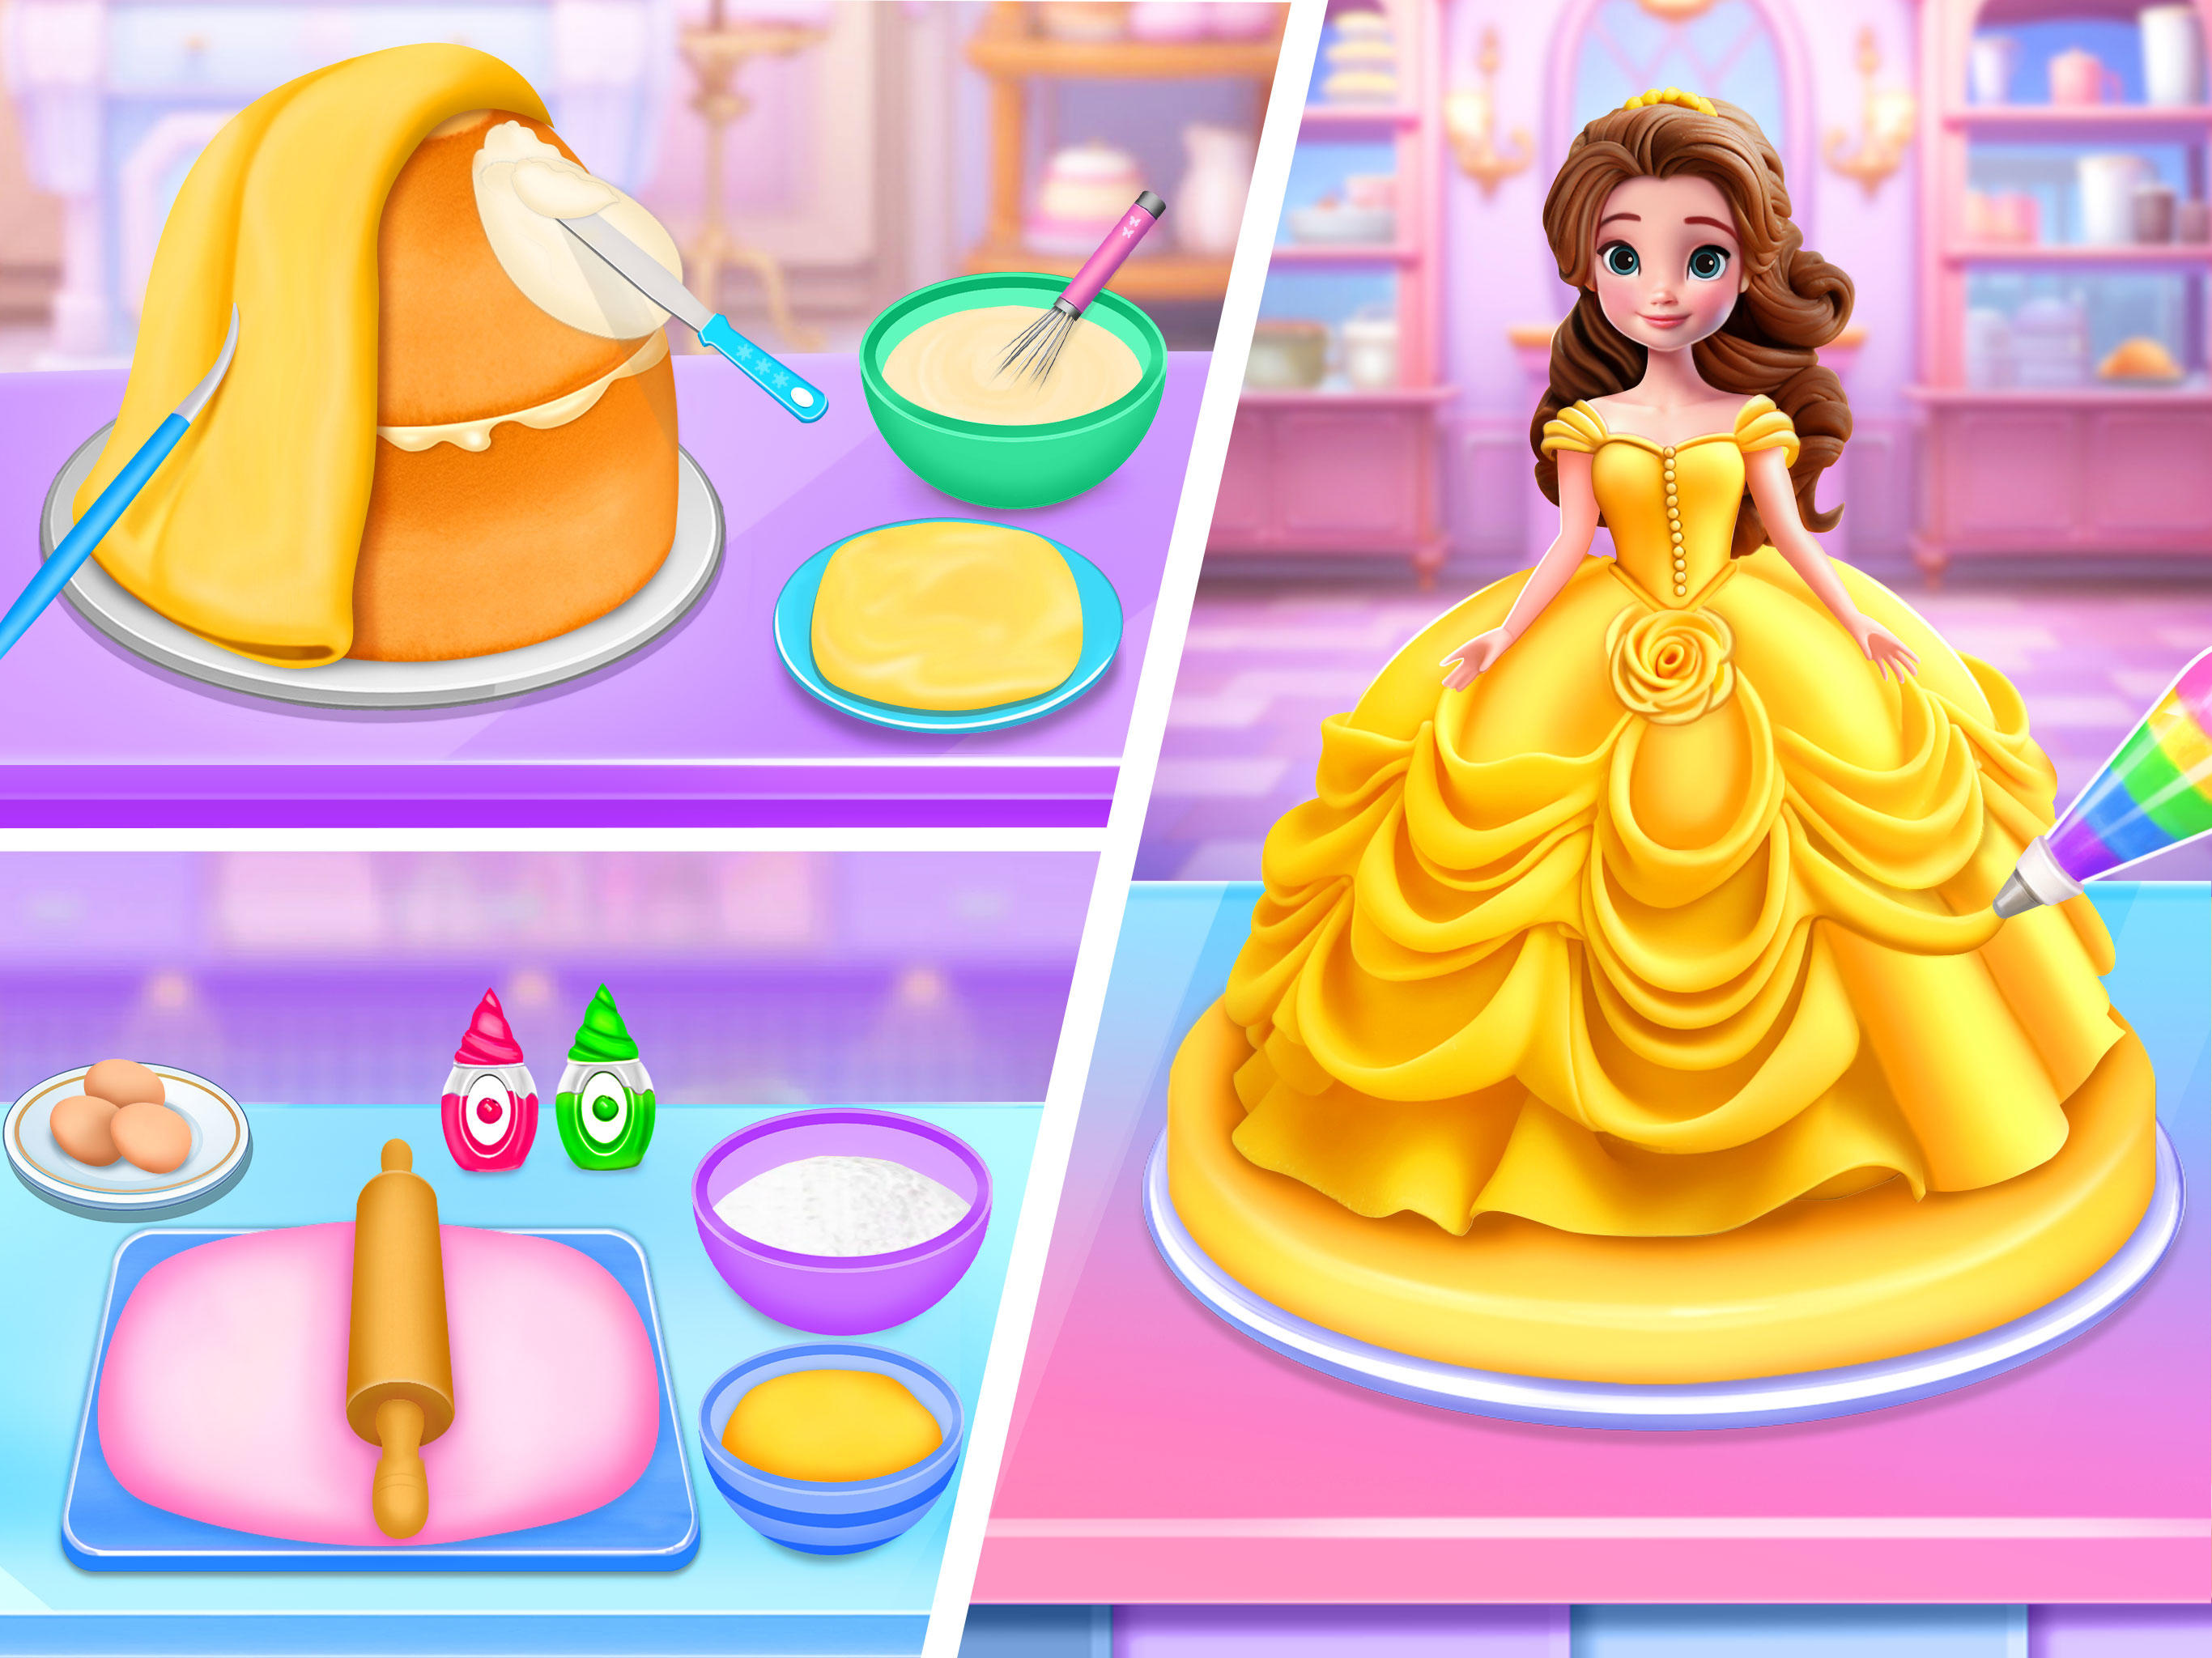 Strawberry Shortcake Bake Shop Princess Cake Games Part 1 - YouTube